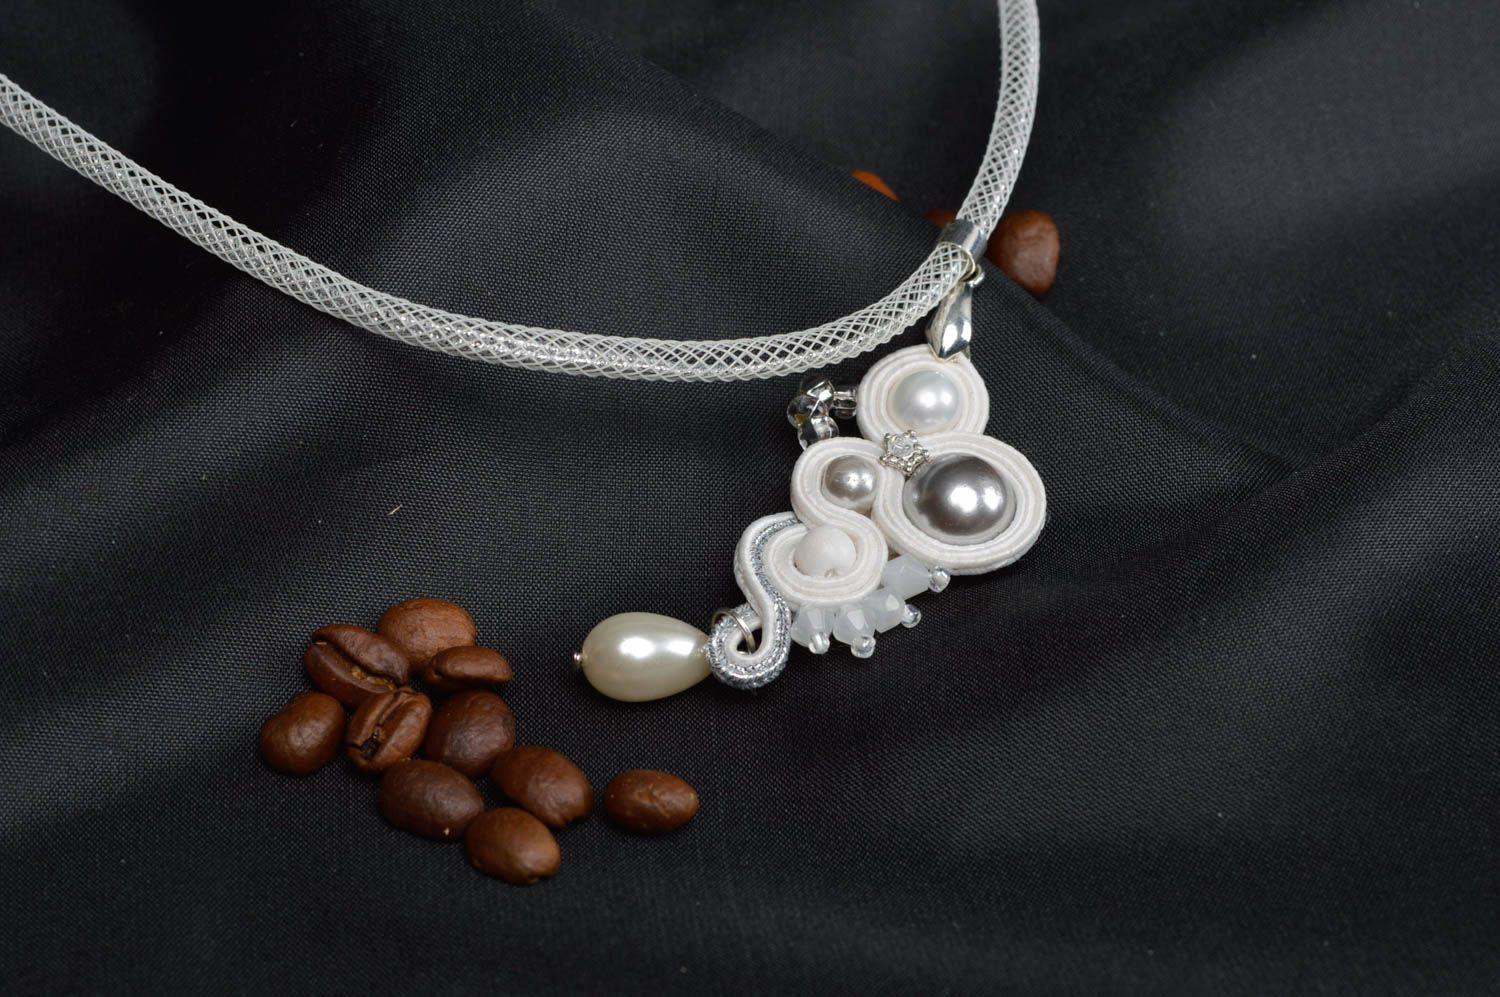 Handmade beautiful pendant soutache unusual accessory cute stylish jewelry photo 1